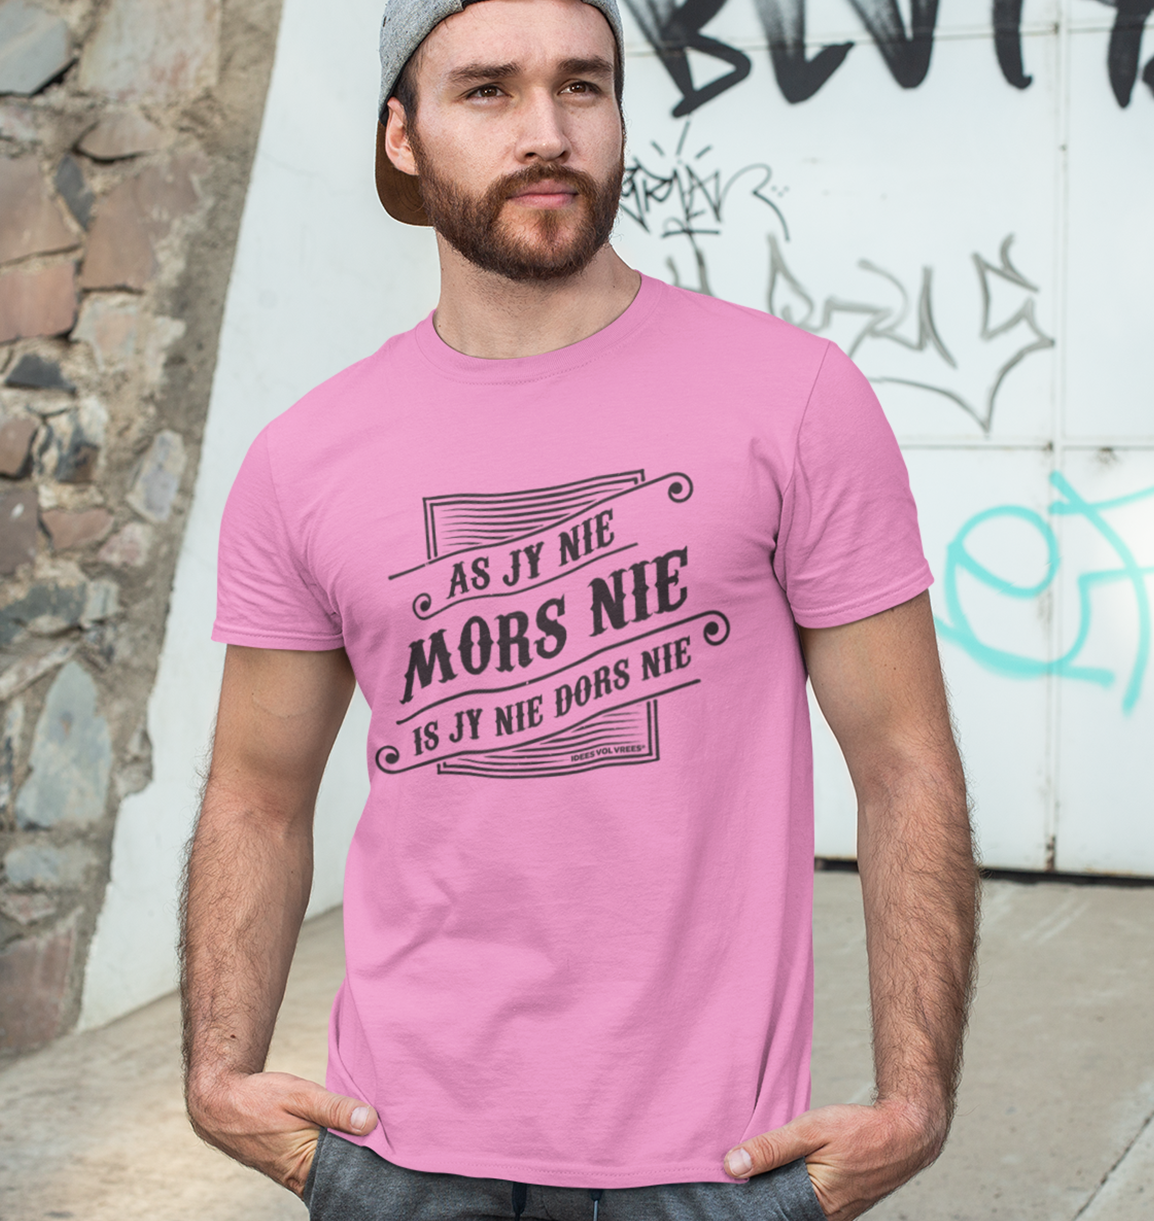 Idees Vol Vrees® "As jy nie mors nie..." Men's T-shirt